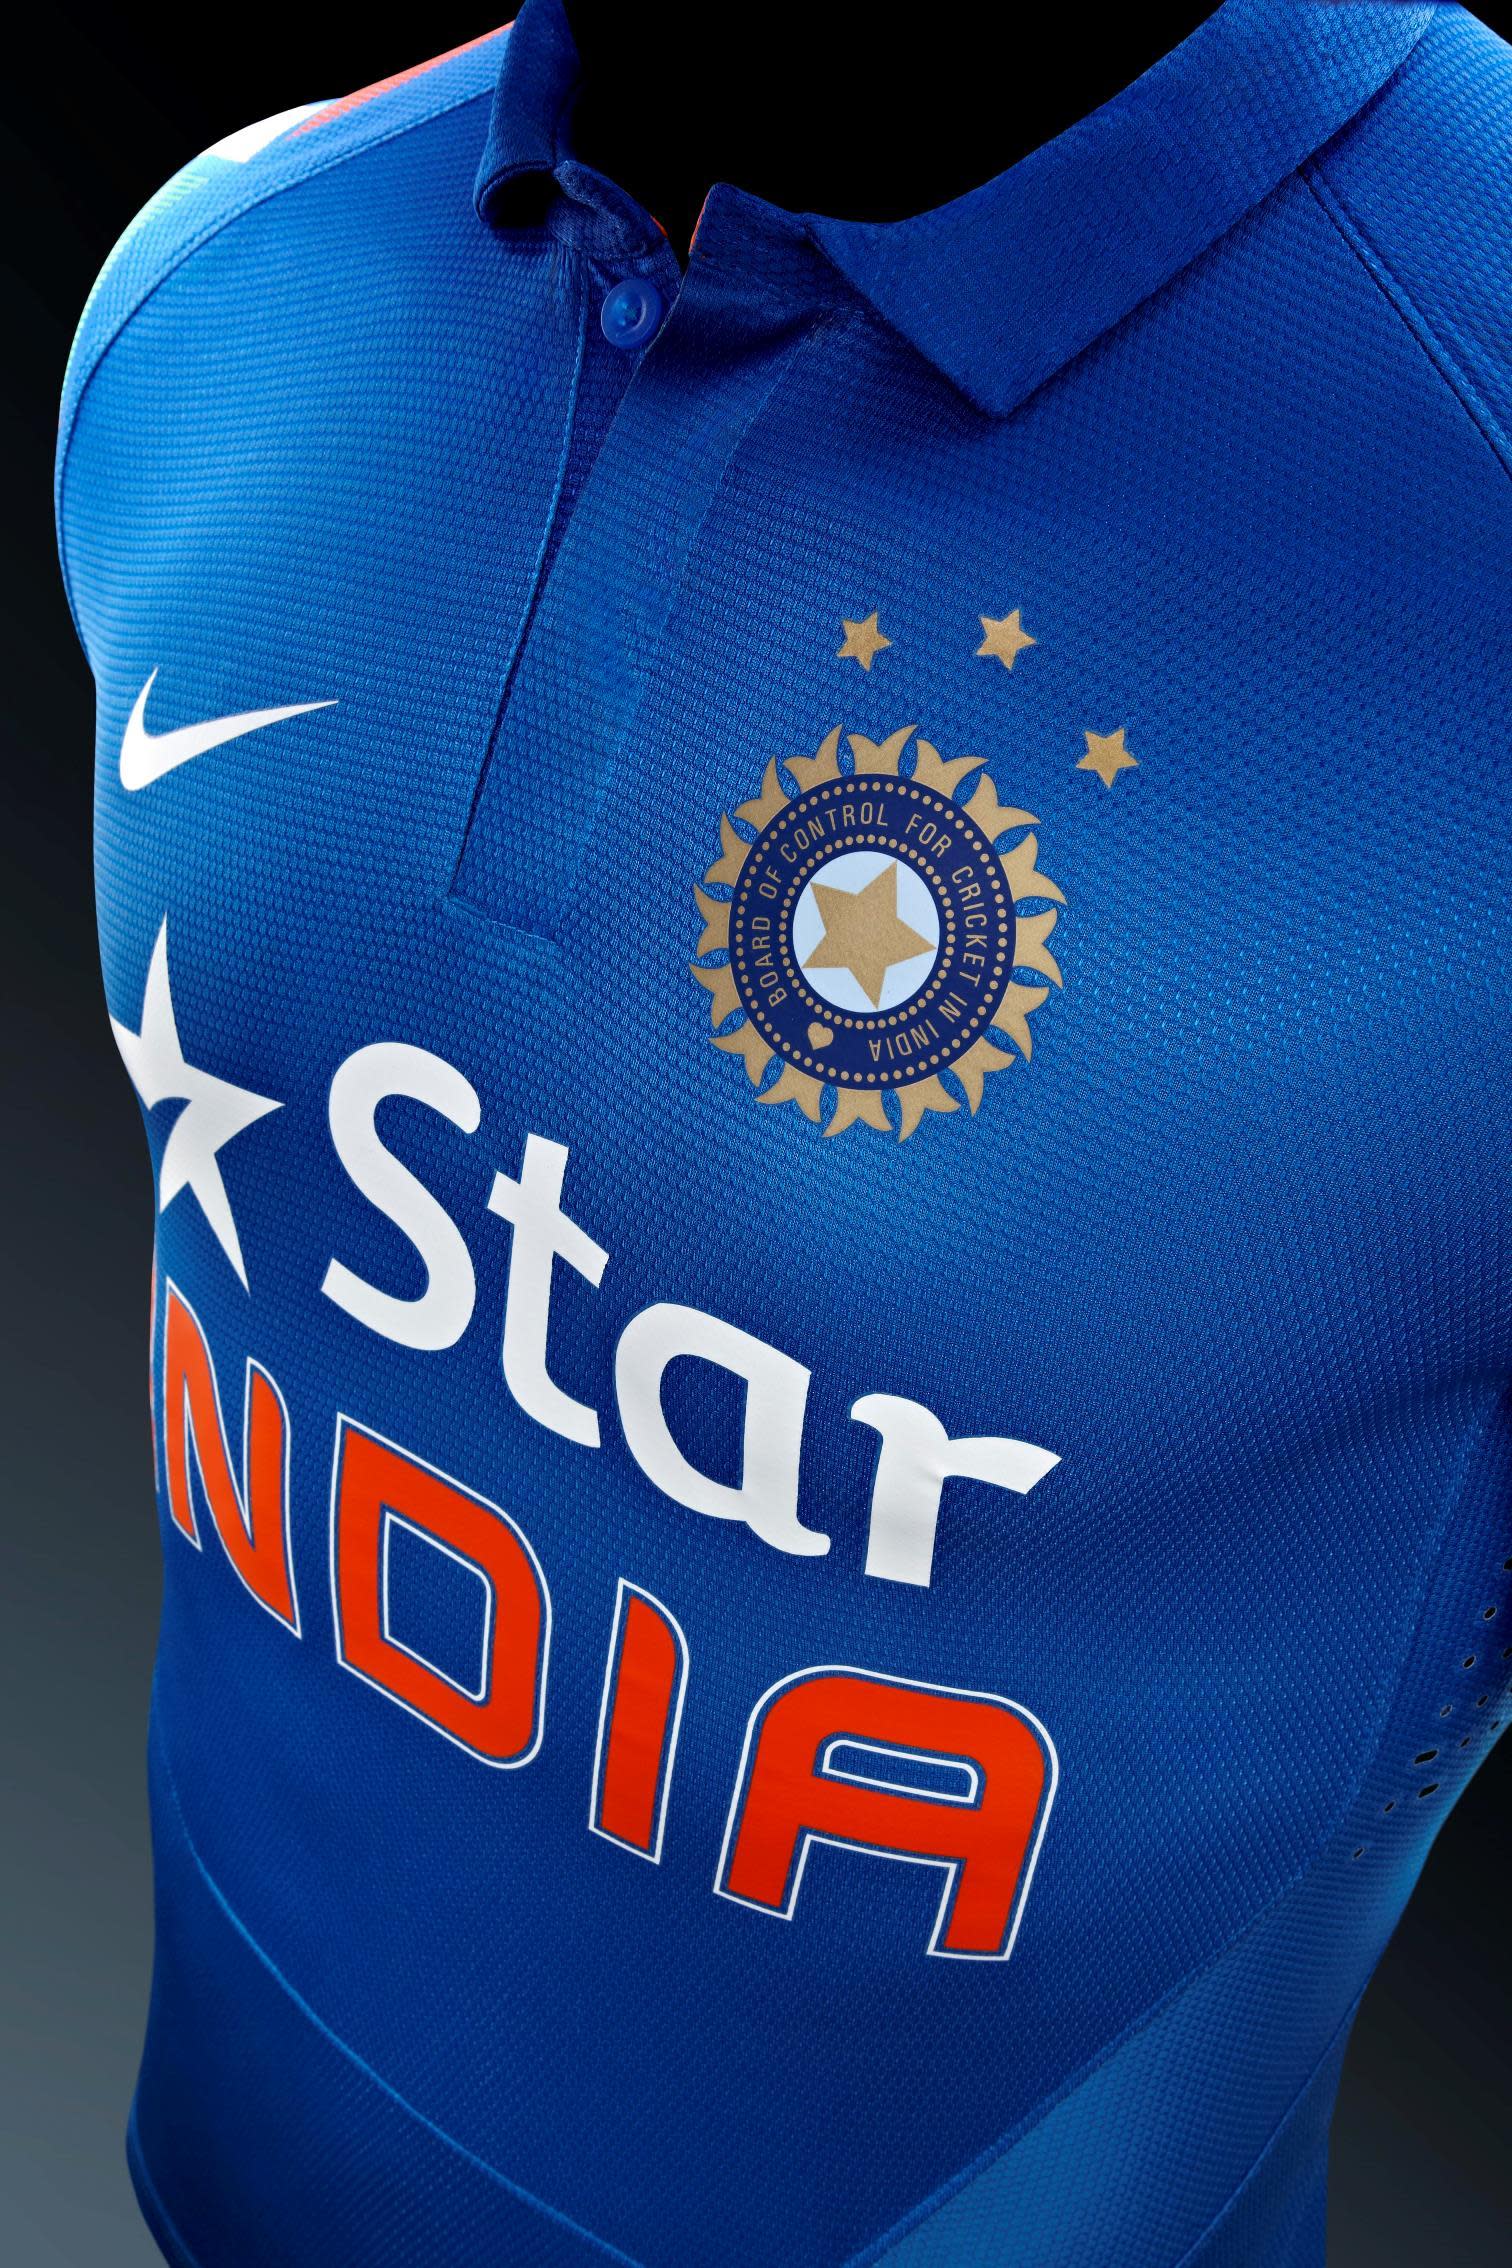 team india cricket jersey nike